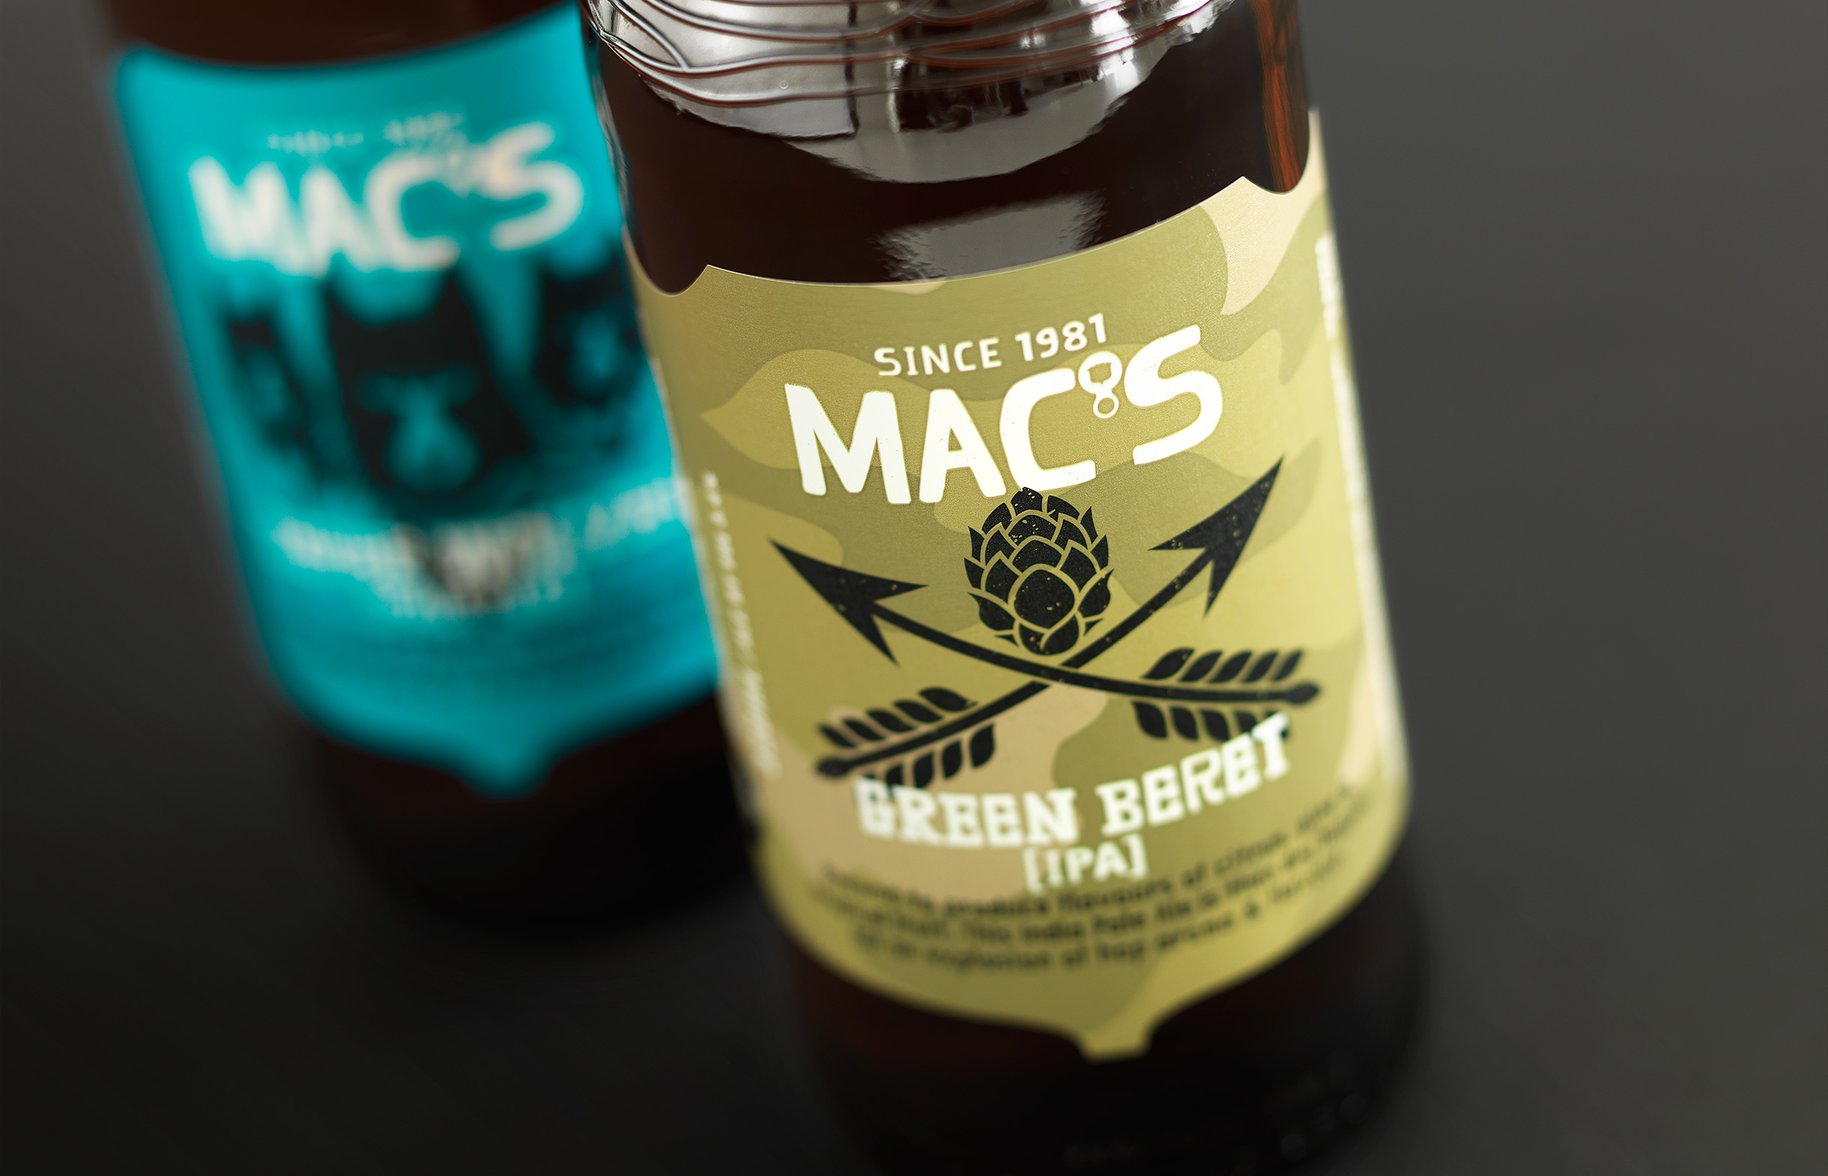 Macs Beer bottle details packaging